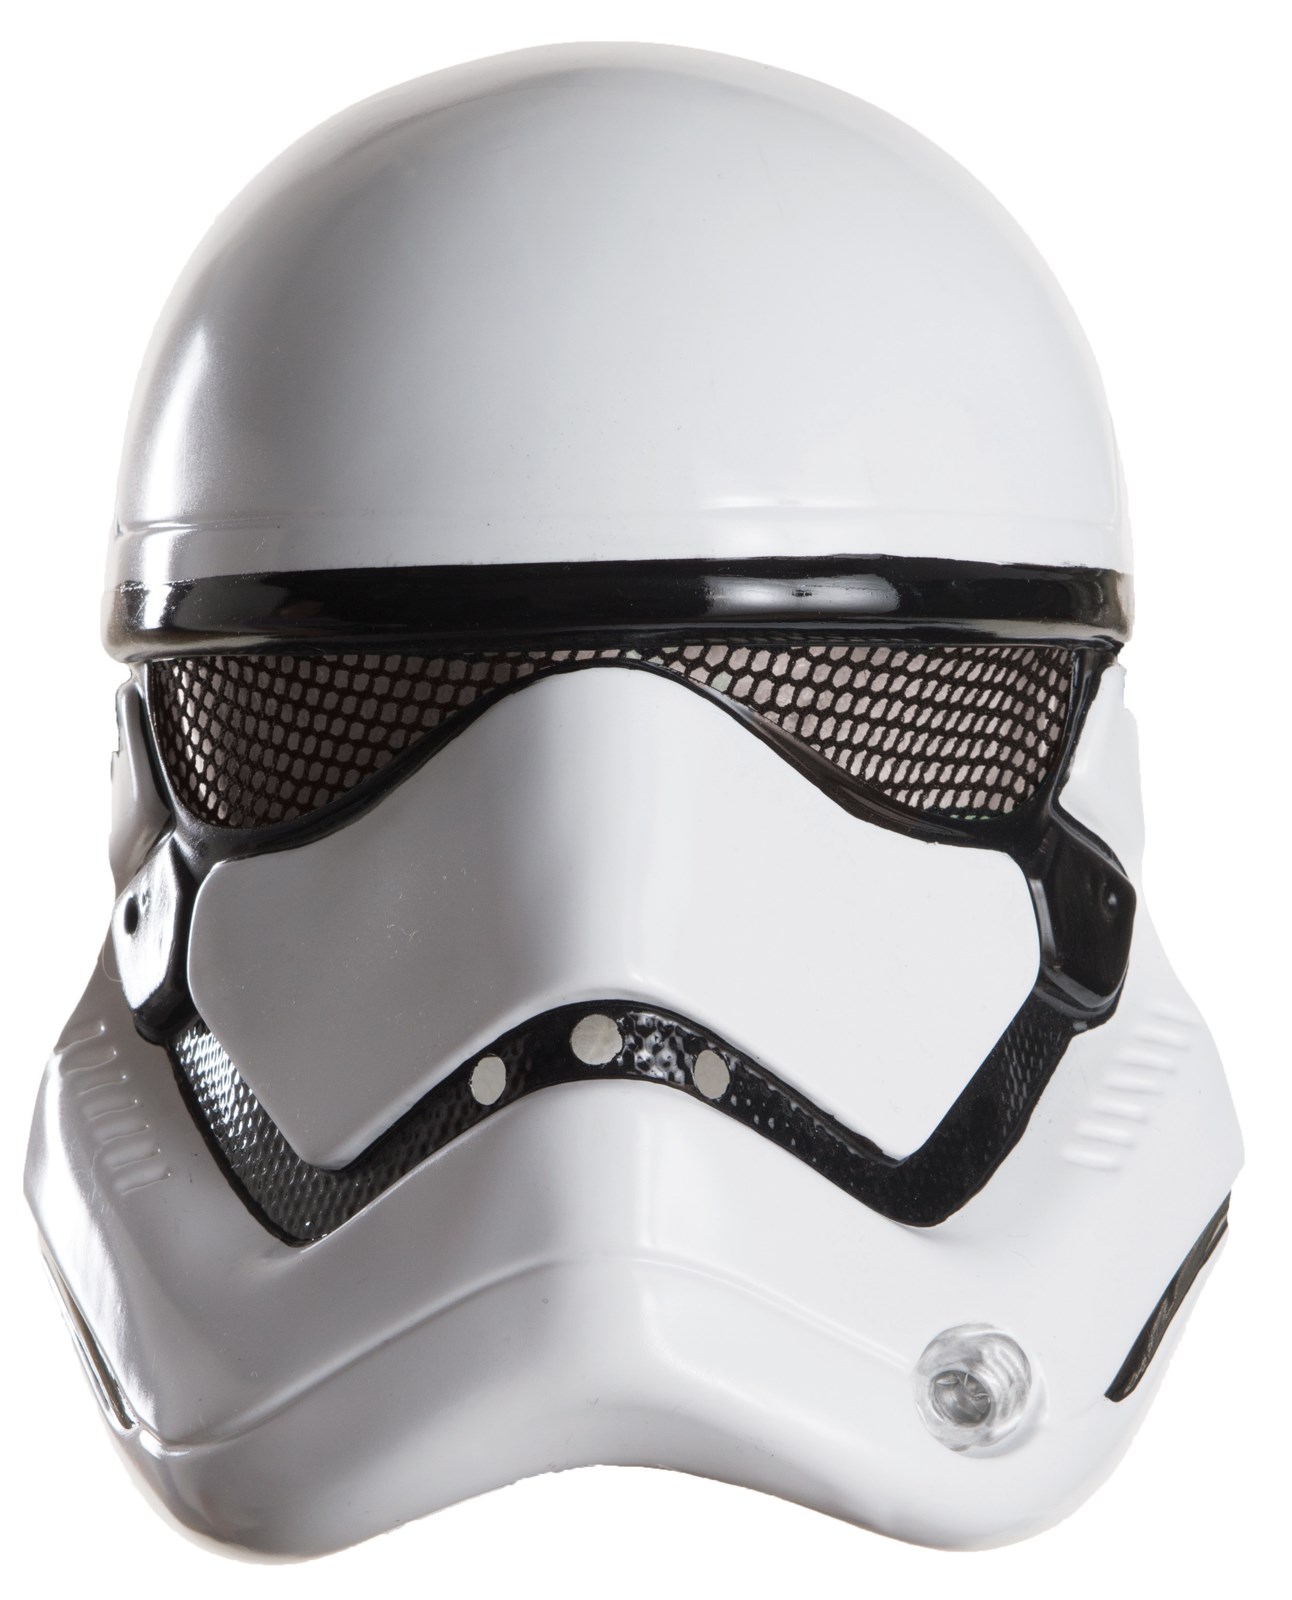 Star Wars:  The Force Awakens - Boys Stormtrooper Half Helmet